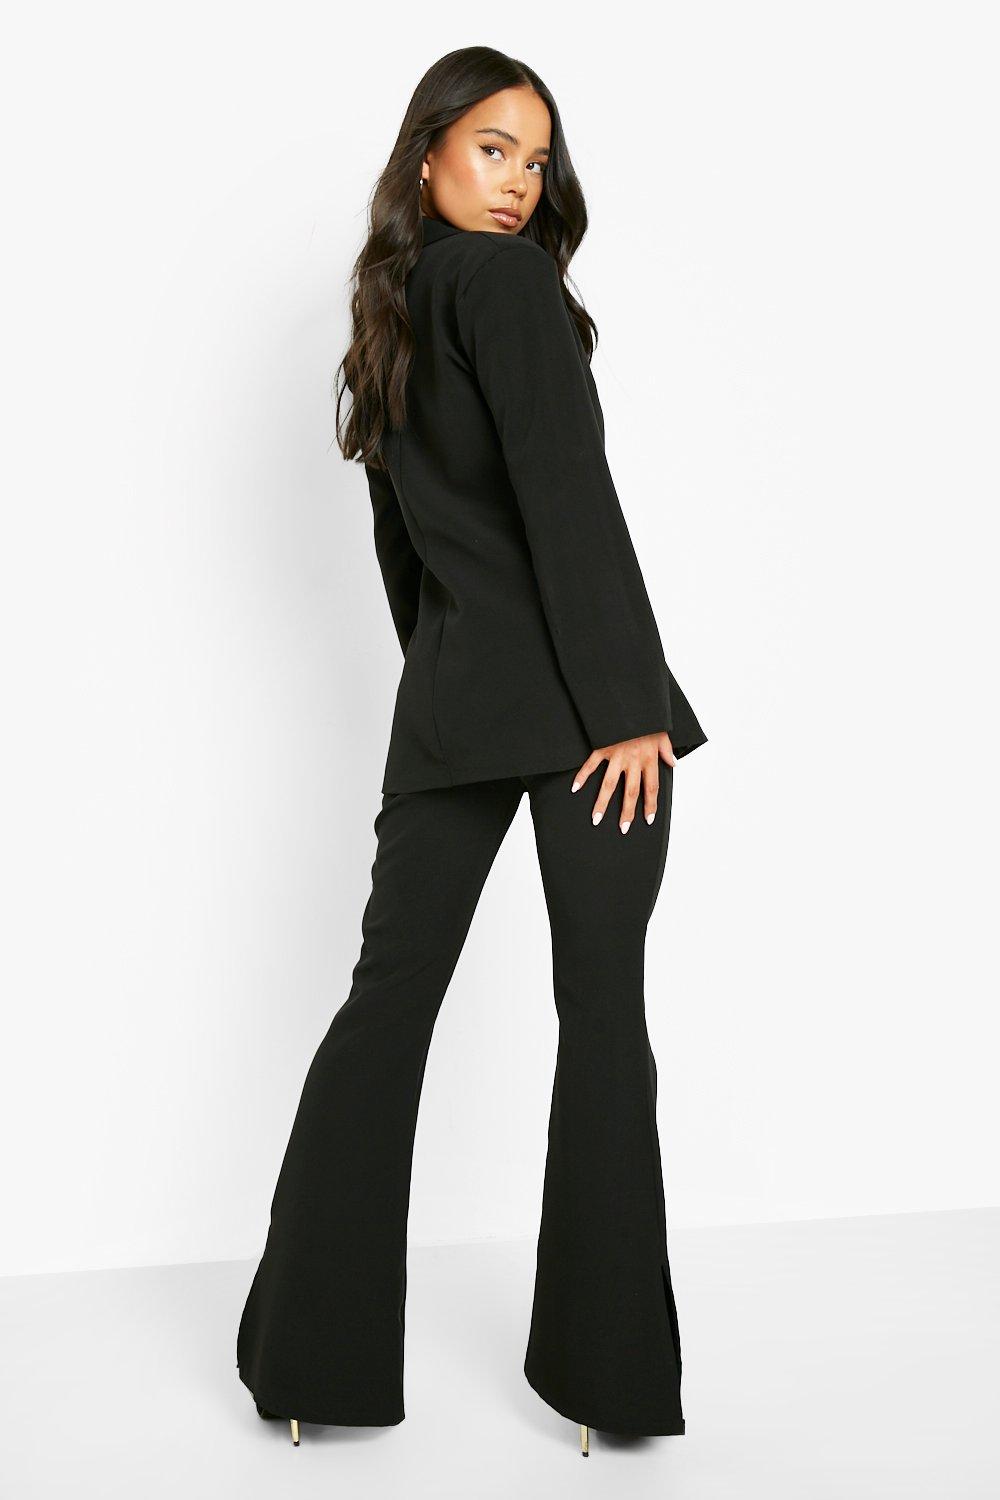 https://media.boohoo.com/i/boohoo/gzz11356_black_xl_1/female-black-petite-seam-side-split-flare-dress-pants